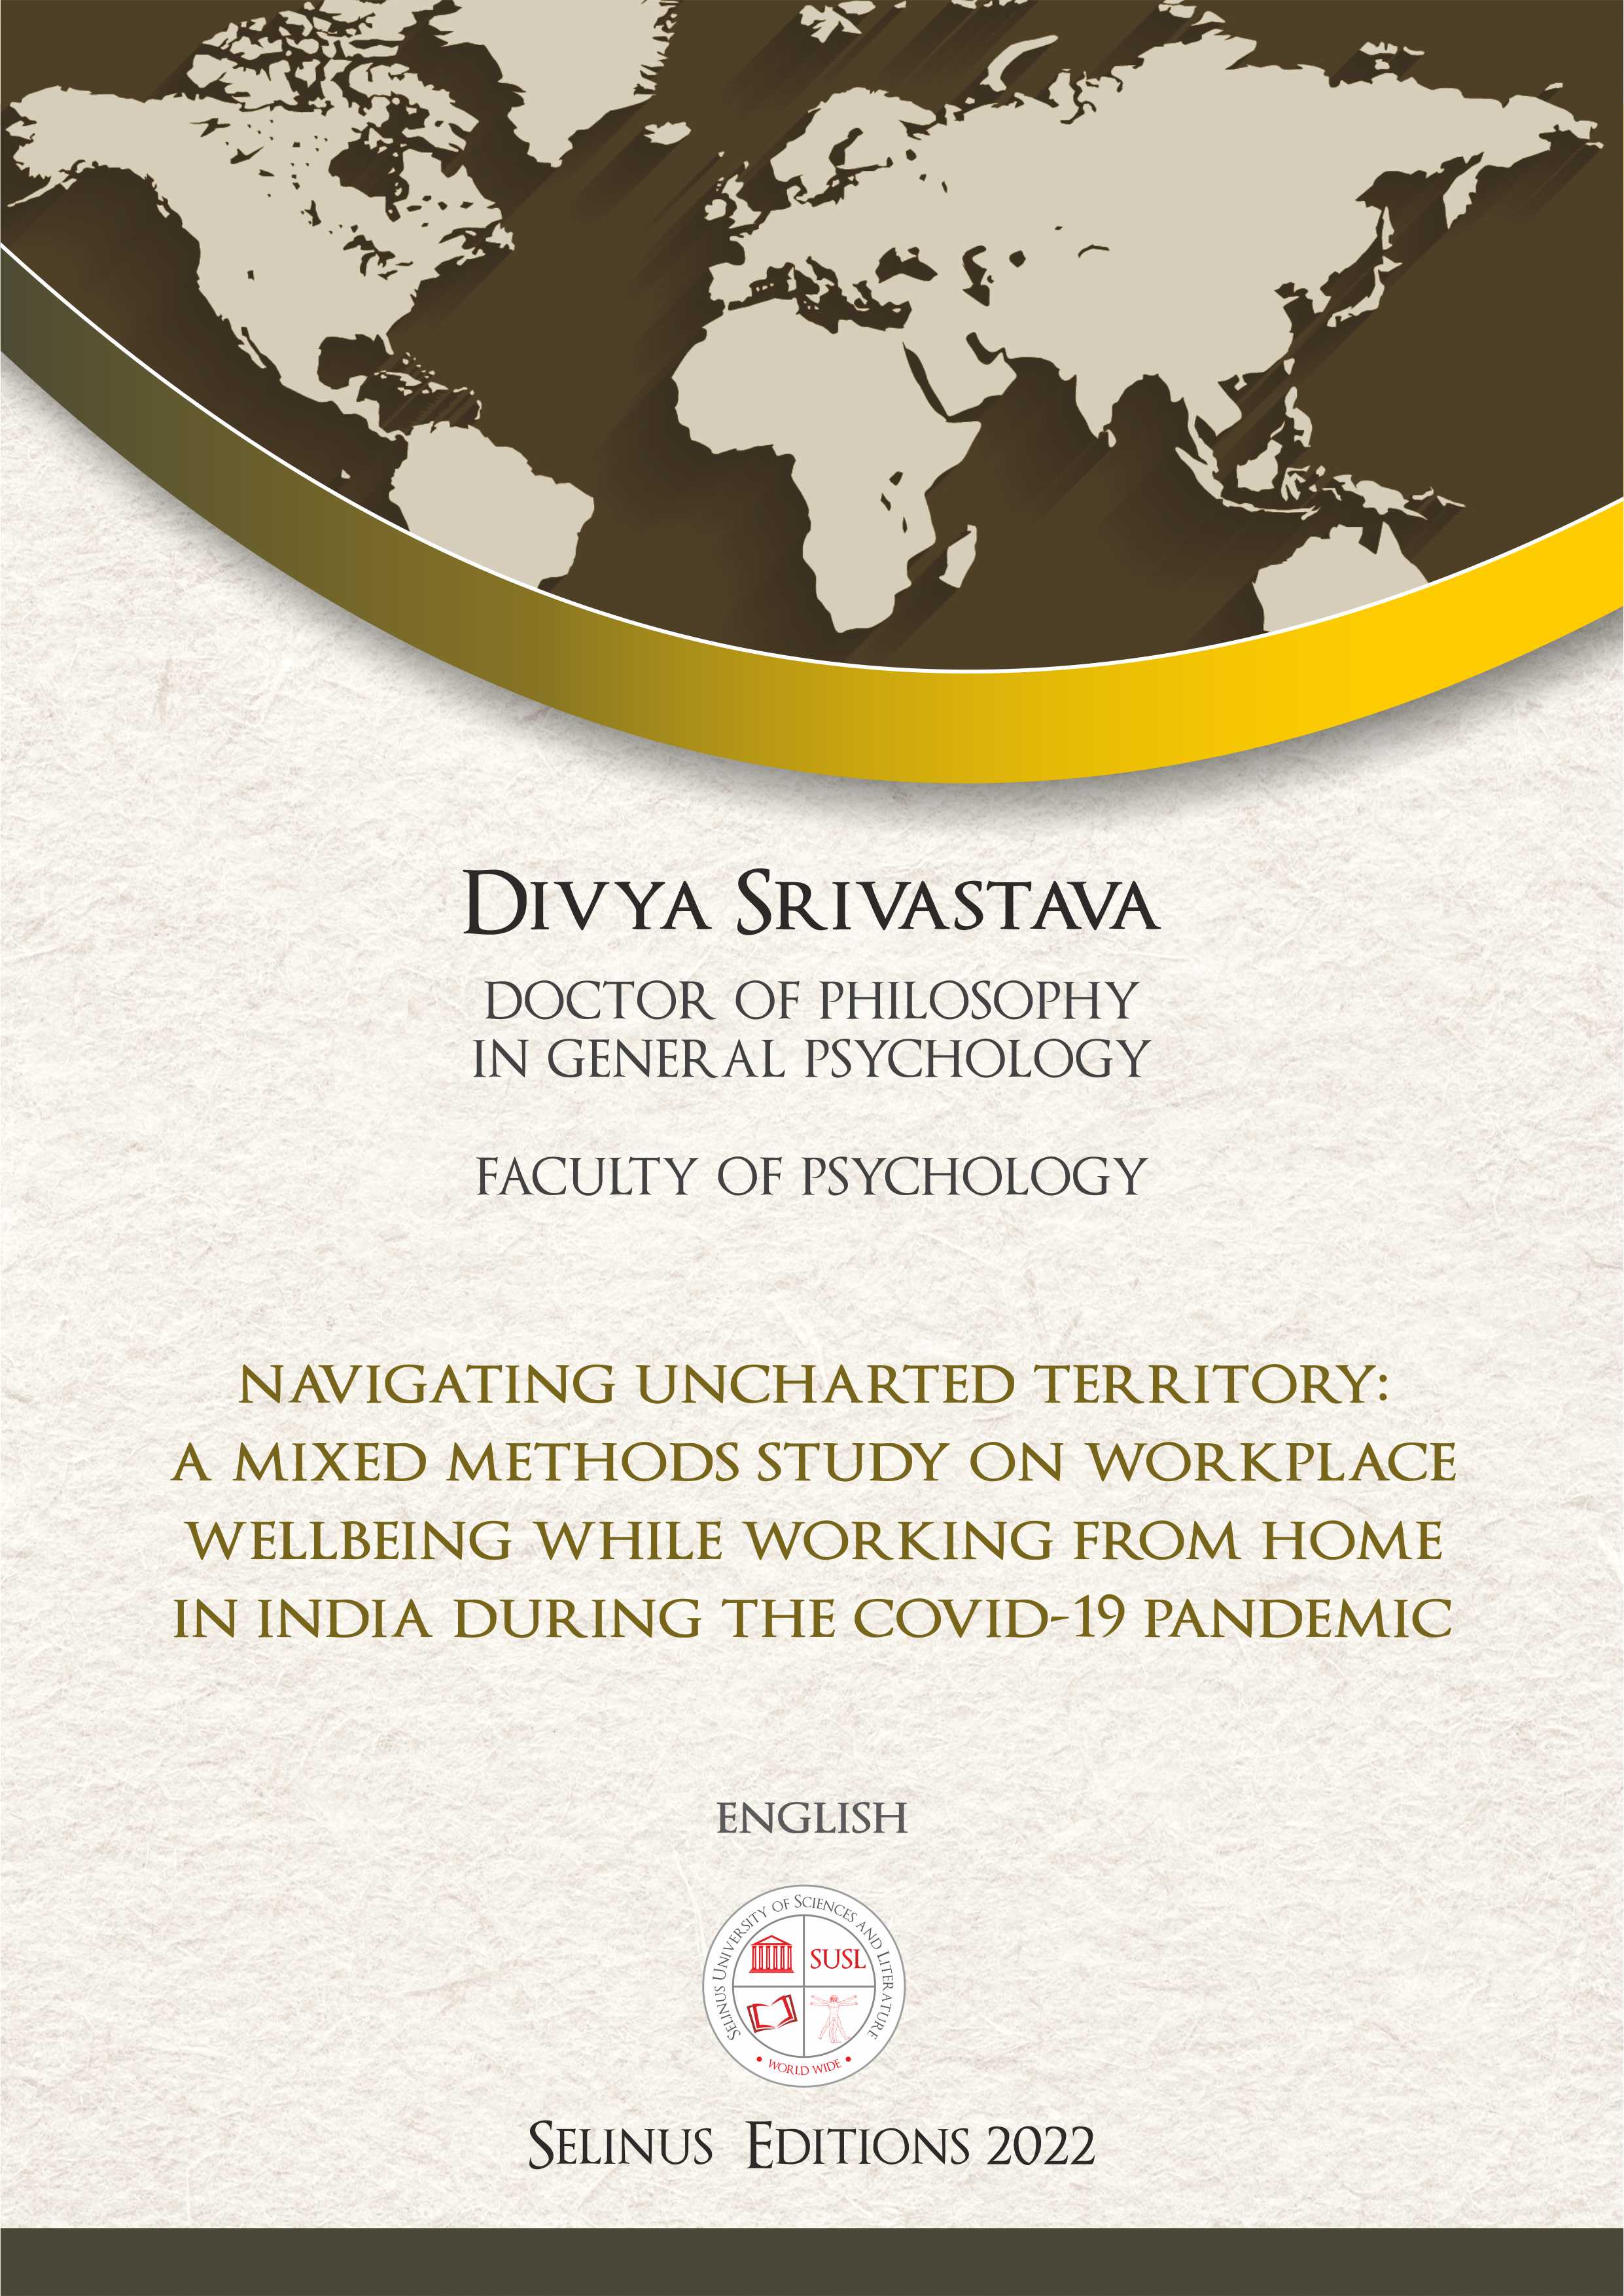 Thesis Divya Srivastava